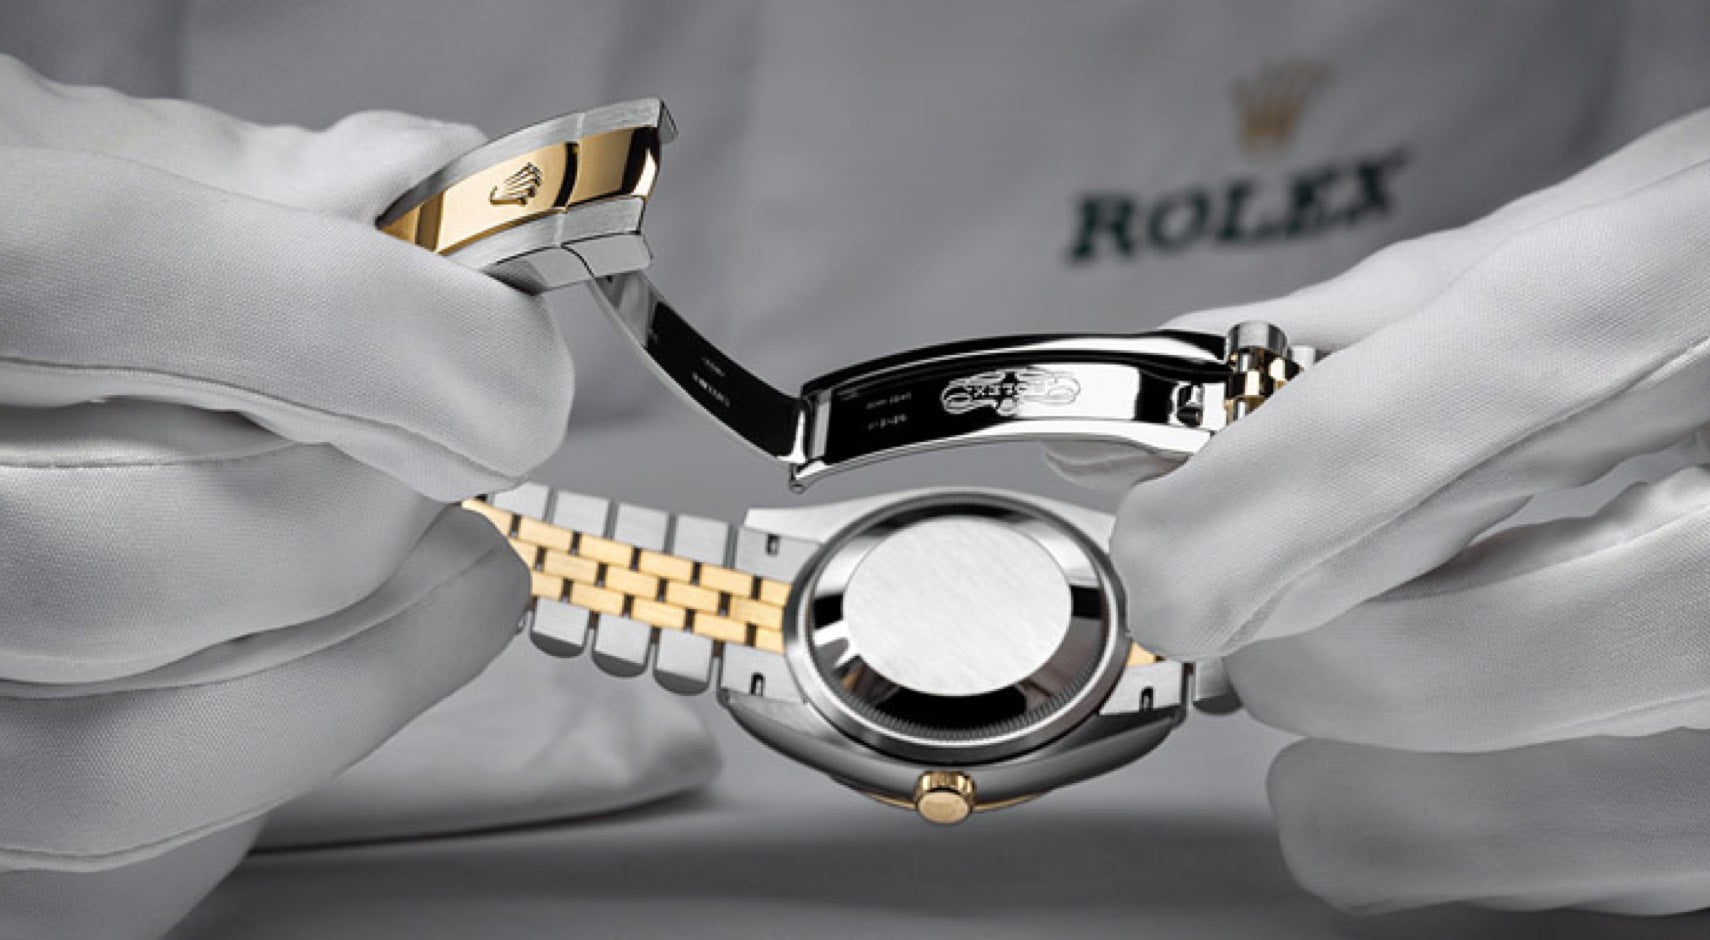 Rolex dealer showing watch authenticity